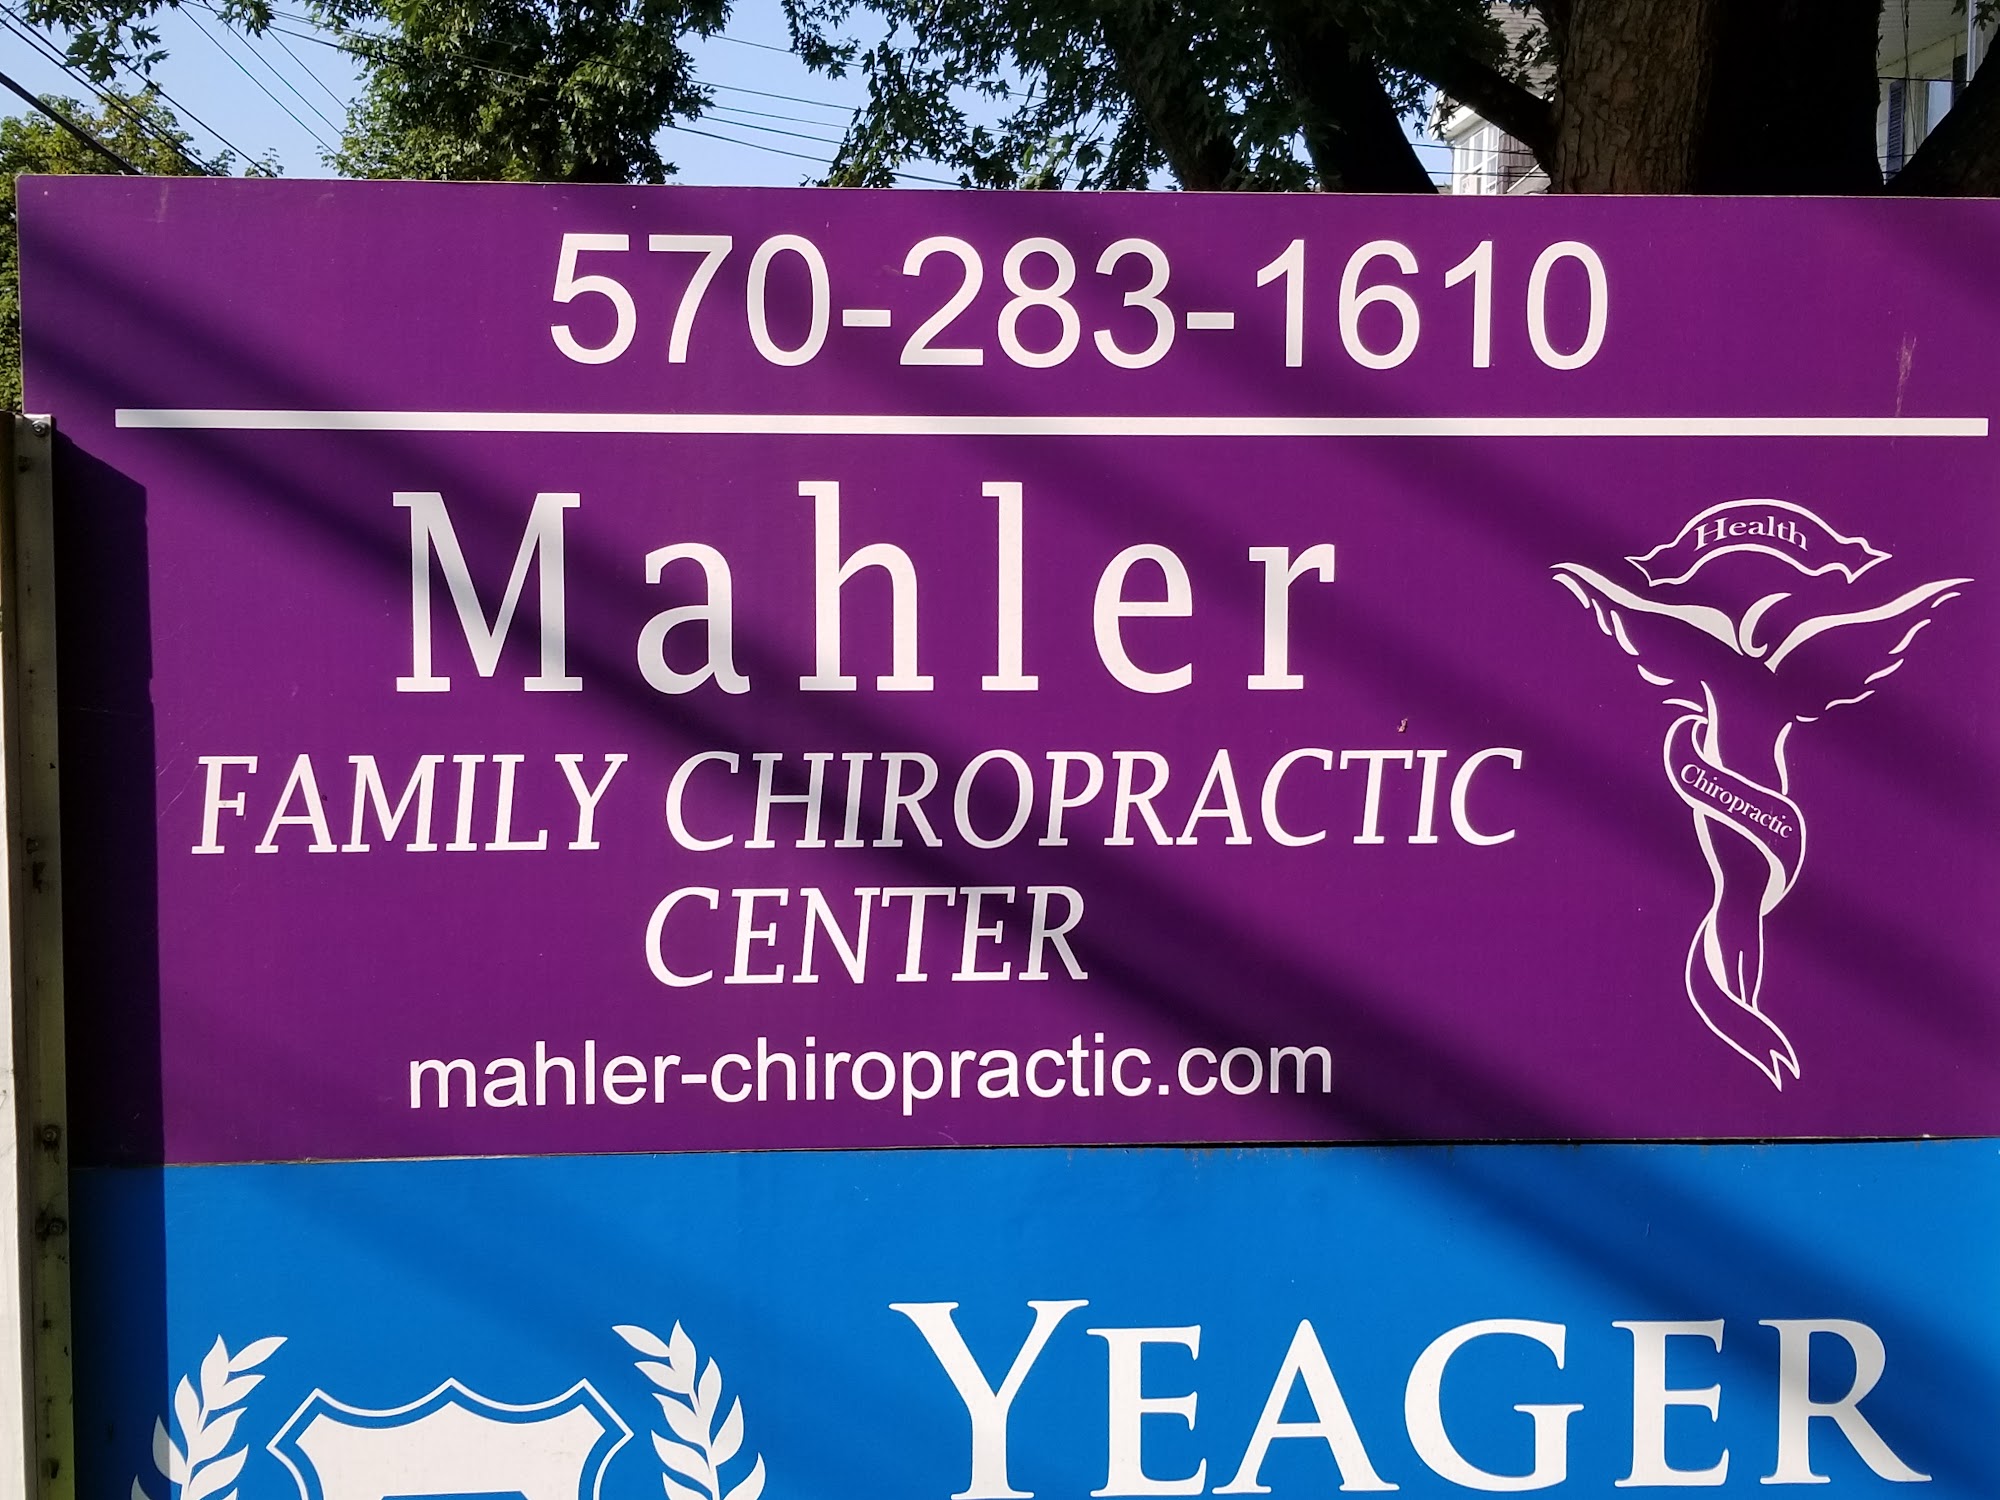 Mahler Family Chiropractic Center